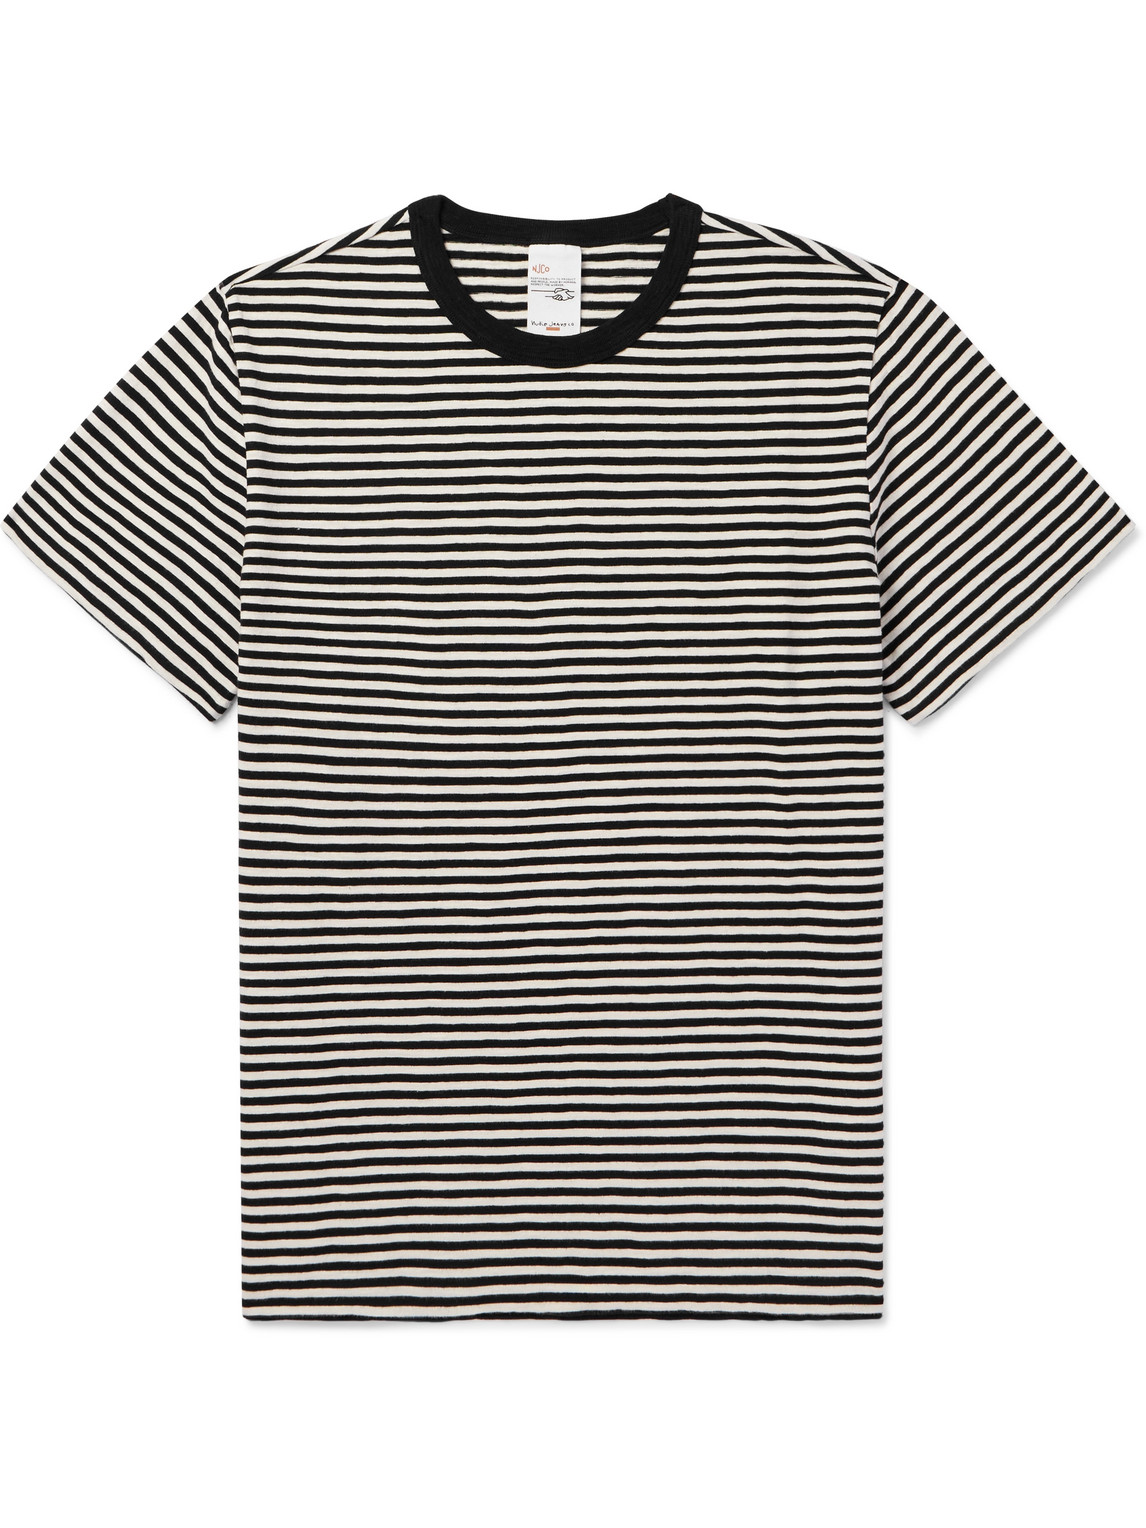 Nudie Jeans Roy Slub Striped Cotton-jersey T-shirt In Black